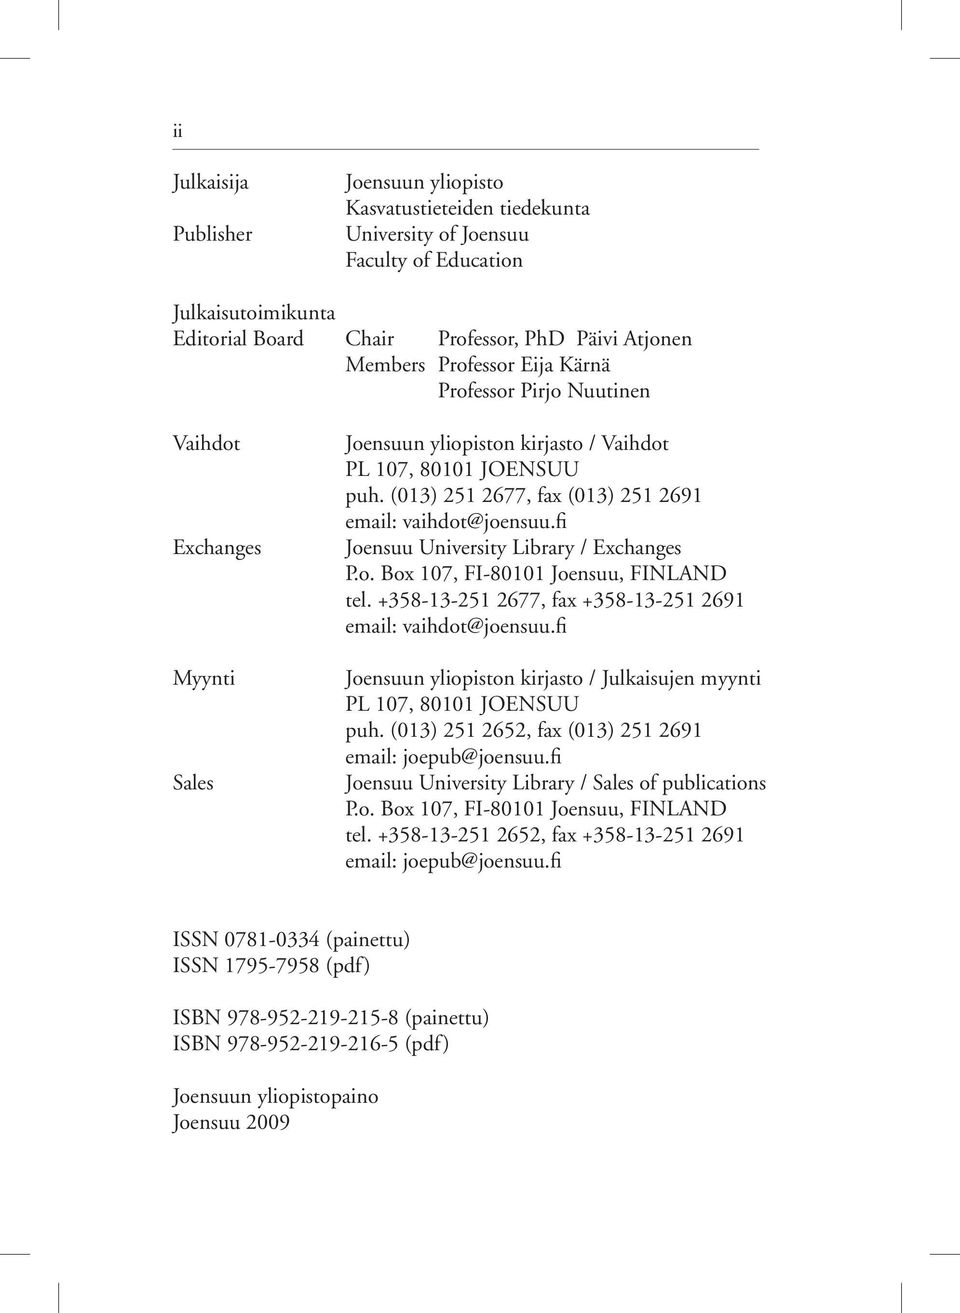 (013) 251 2677, fax (013) 251 2691 email: vaihdot@joensuu.fi Joensuu University Library / Exchanges P.o. Box 107, FI-80101 Joensuu, FINLAND tel.